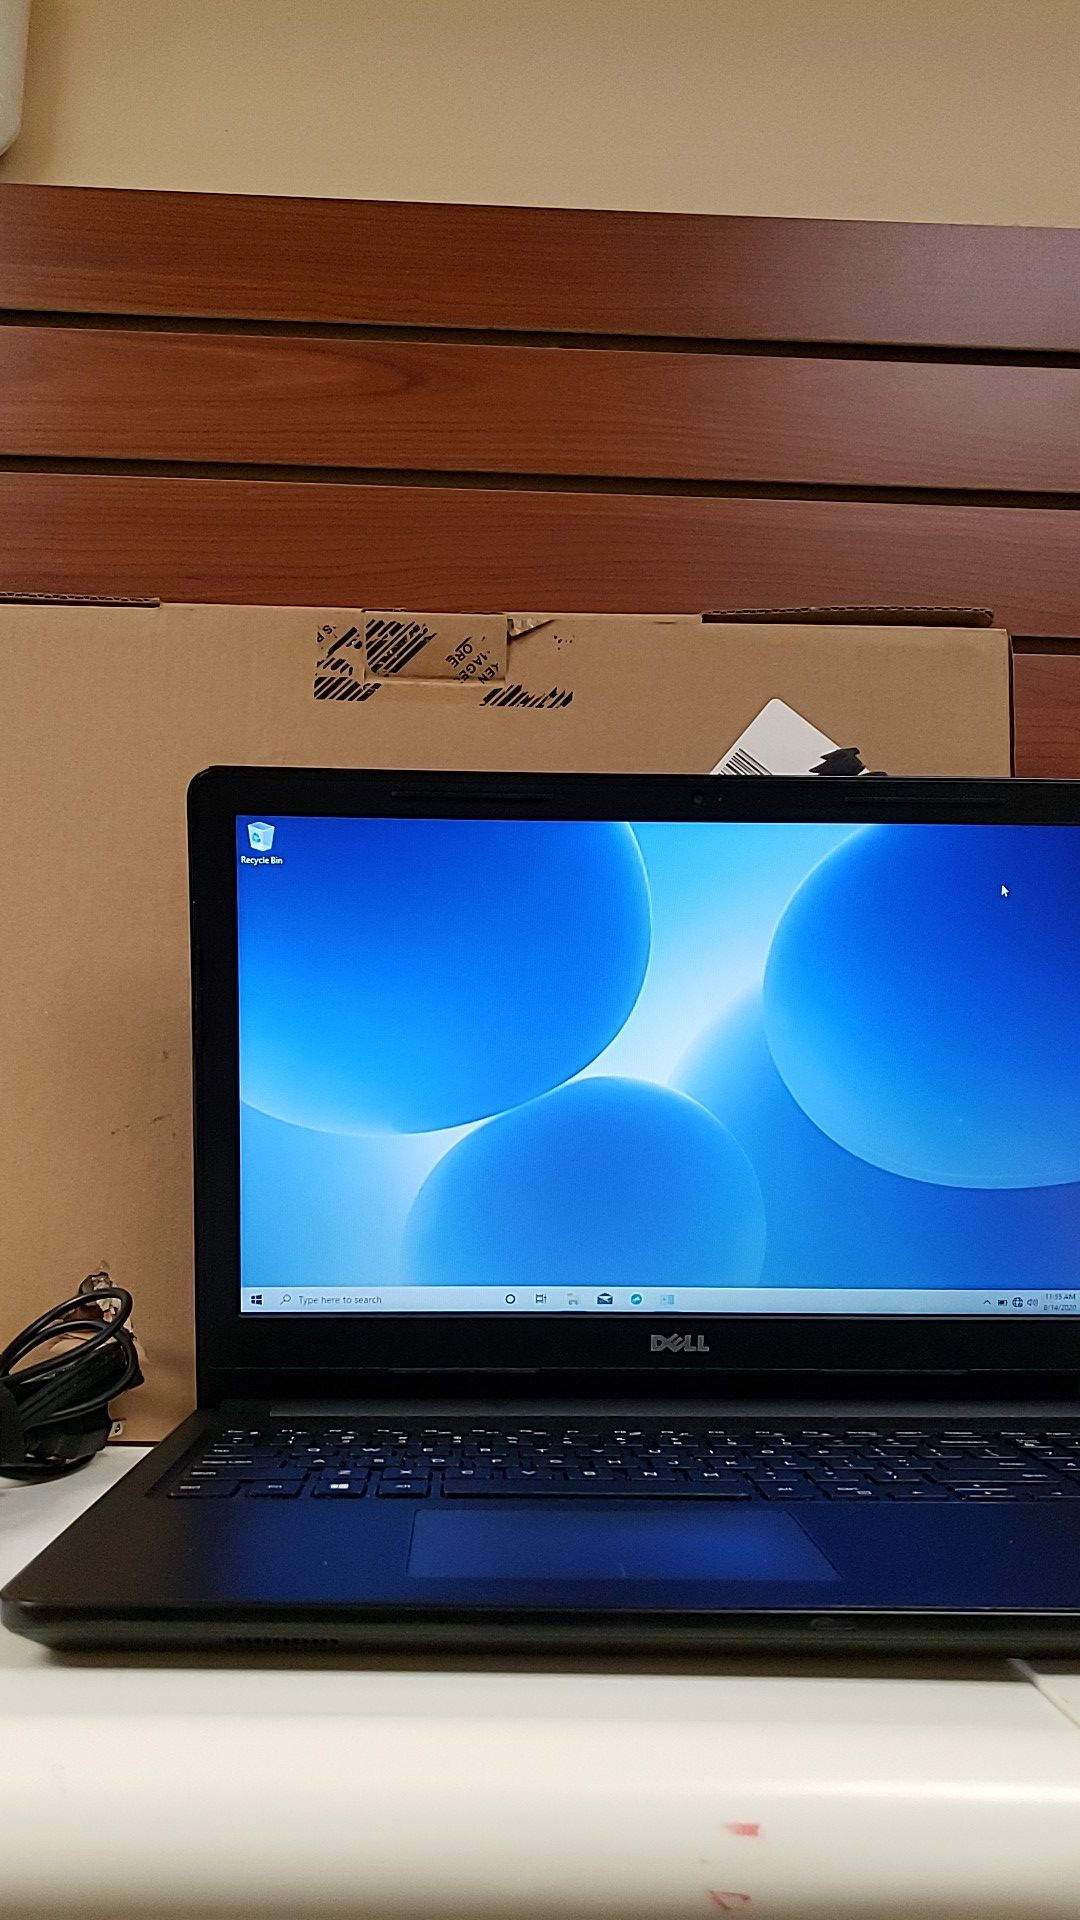 Dell Inspiron 15 3000 Series Windows 10 Laptop